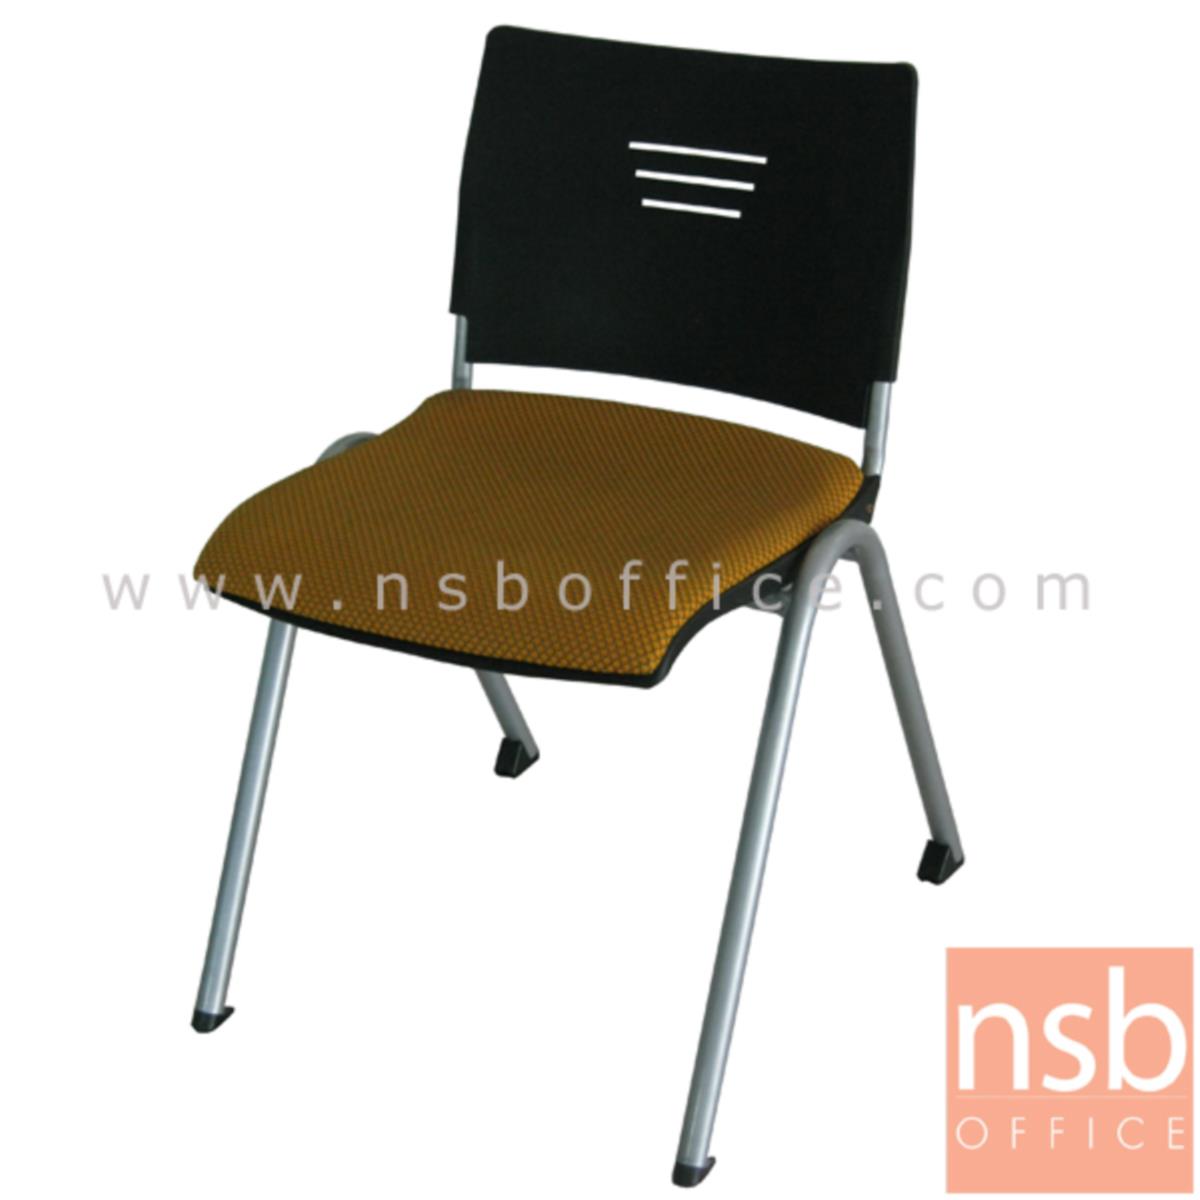 B05A173:เก้าอี้อเนกประสงค์เฟรมโพลี่ รุ่น Elgin (เอลจิน) โครงเก้าอี้พ่นสีในระบบ epoxy 